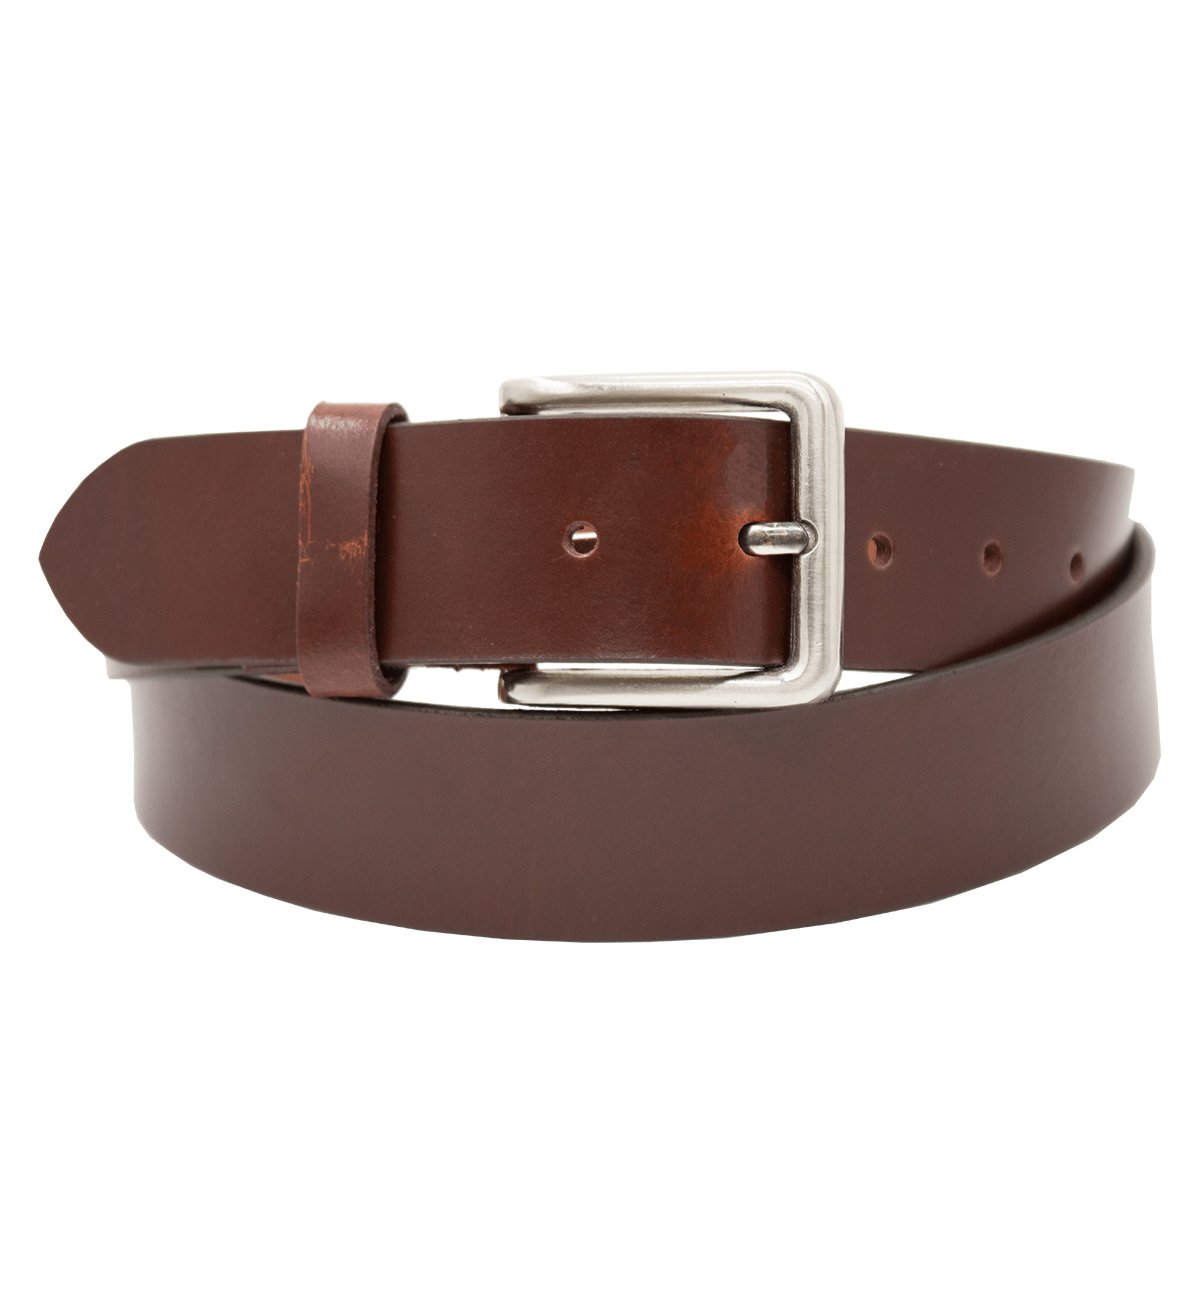 MACHO - Men's Genuine Leather Belt with Silver Heavy Buckle - #BT-818